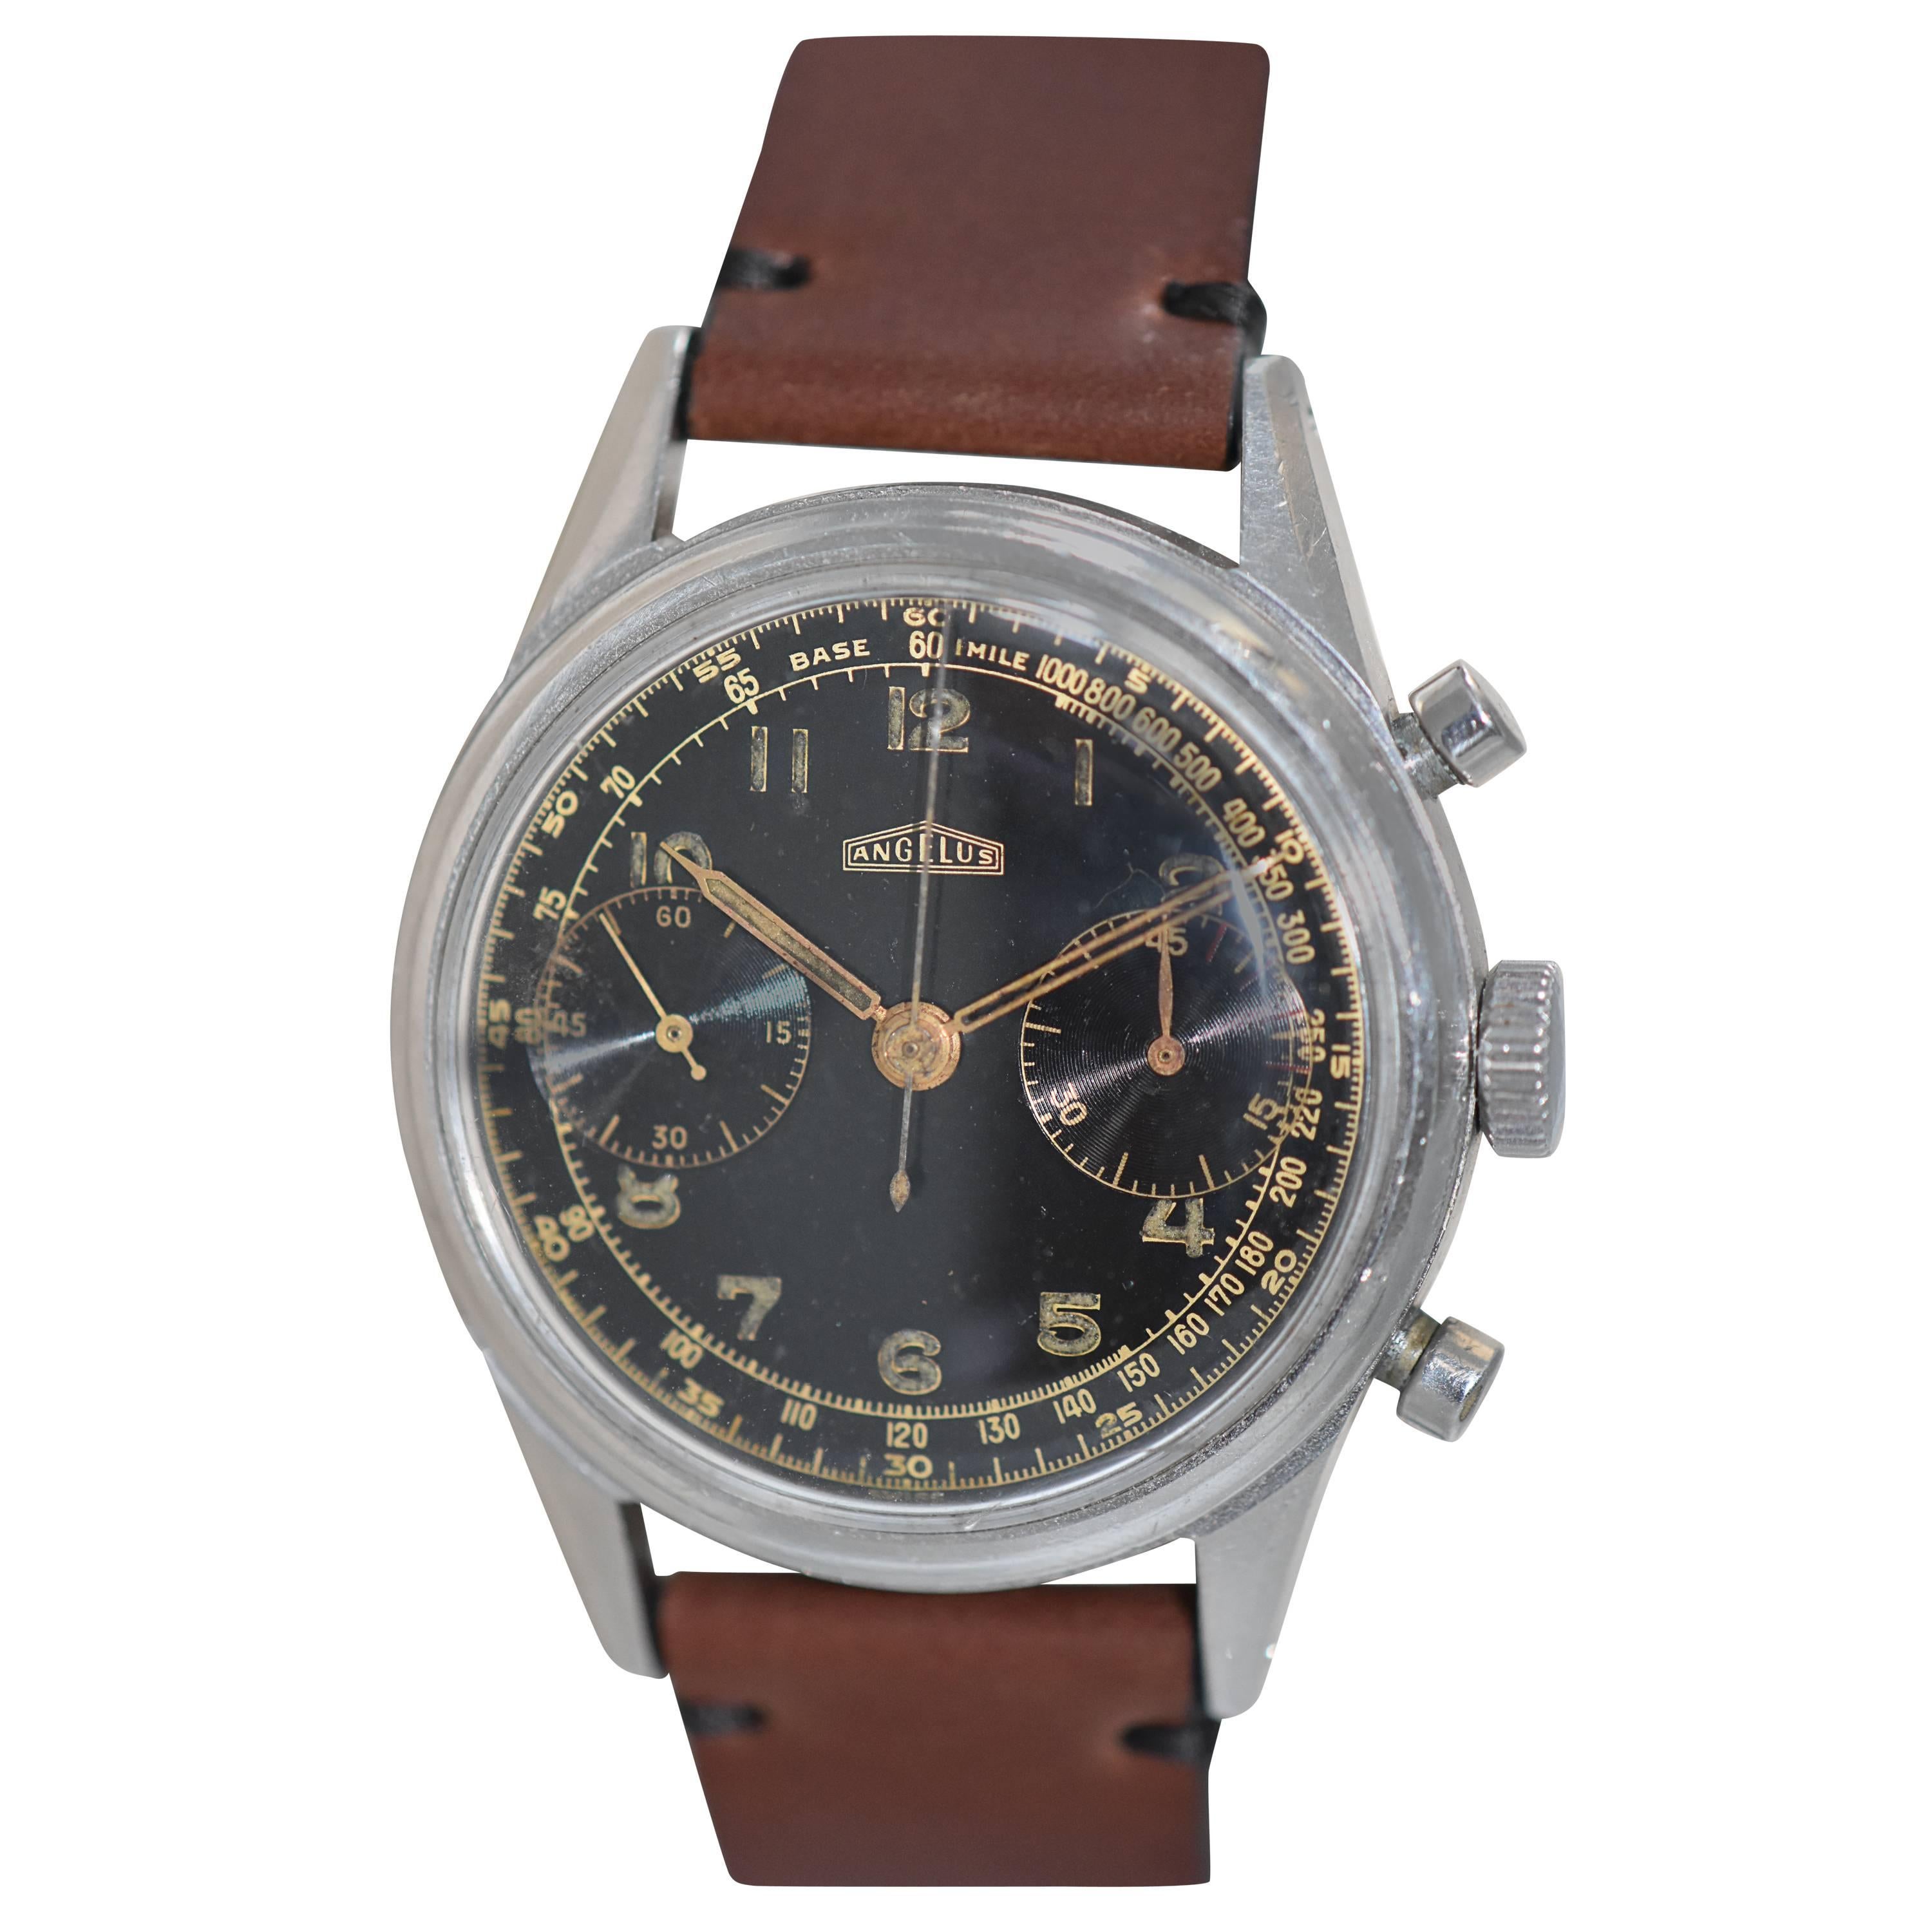 Angelus Caliber 215 Chronograph 1950's Wristwatch